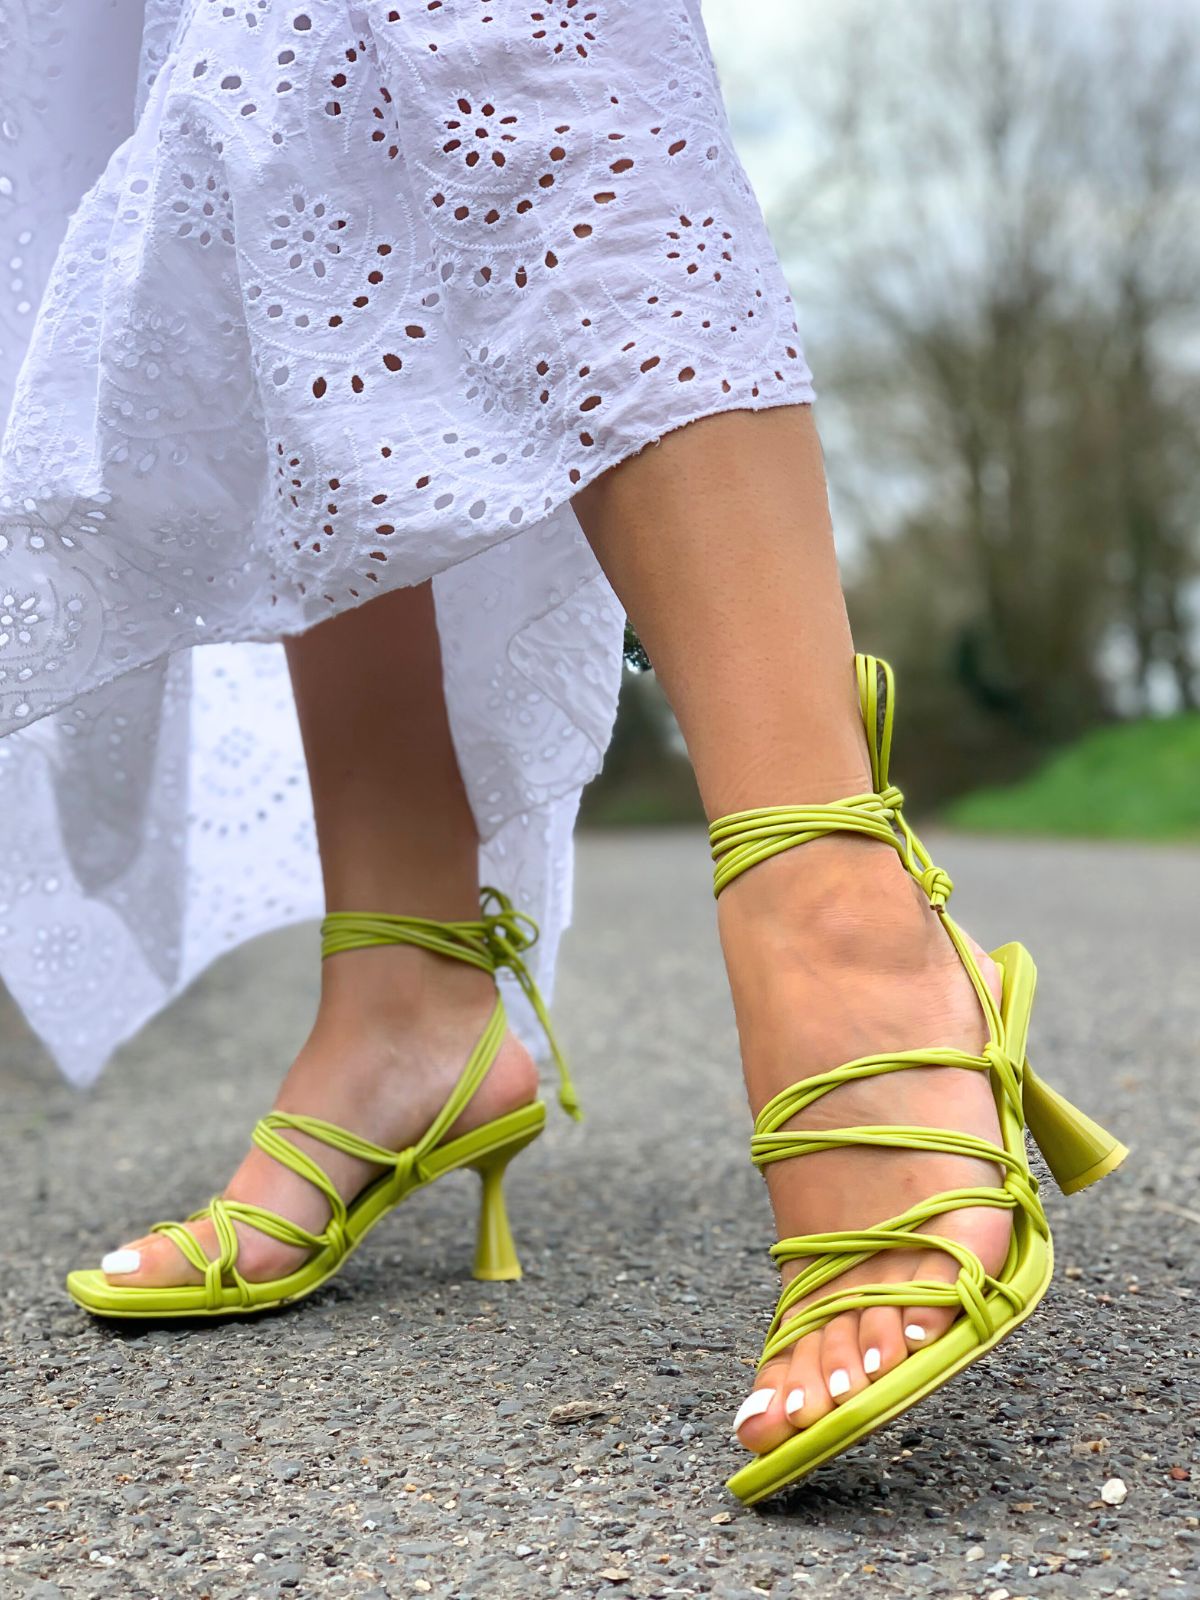 Stylish Lace-Up Sandals Heels